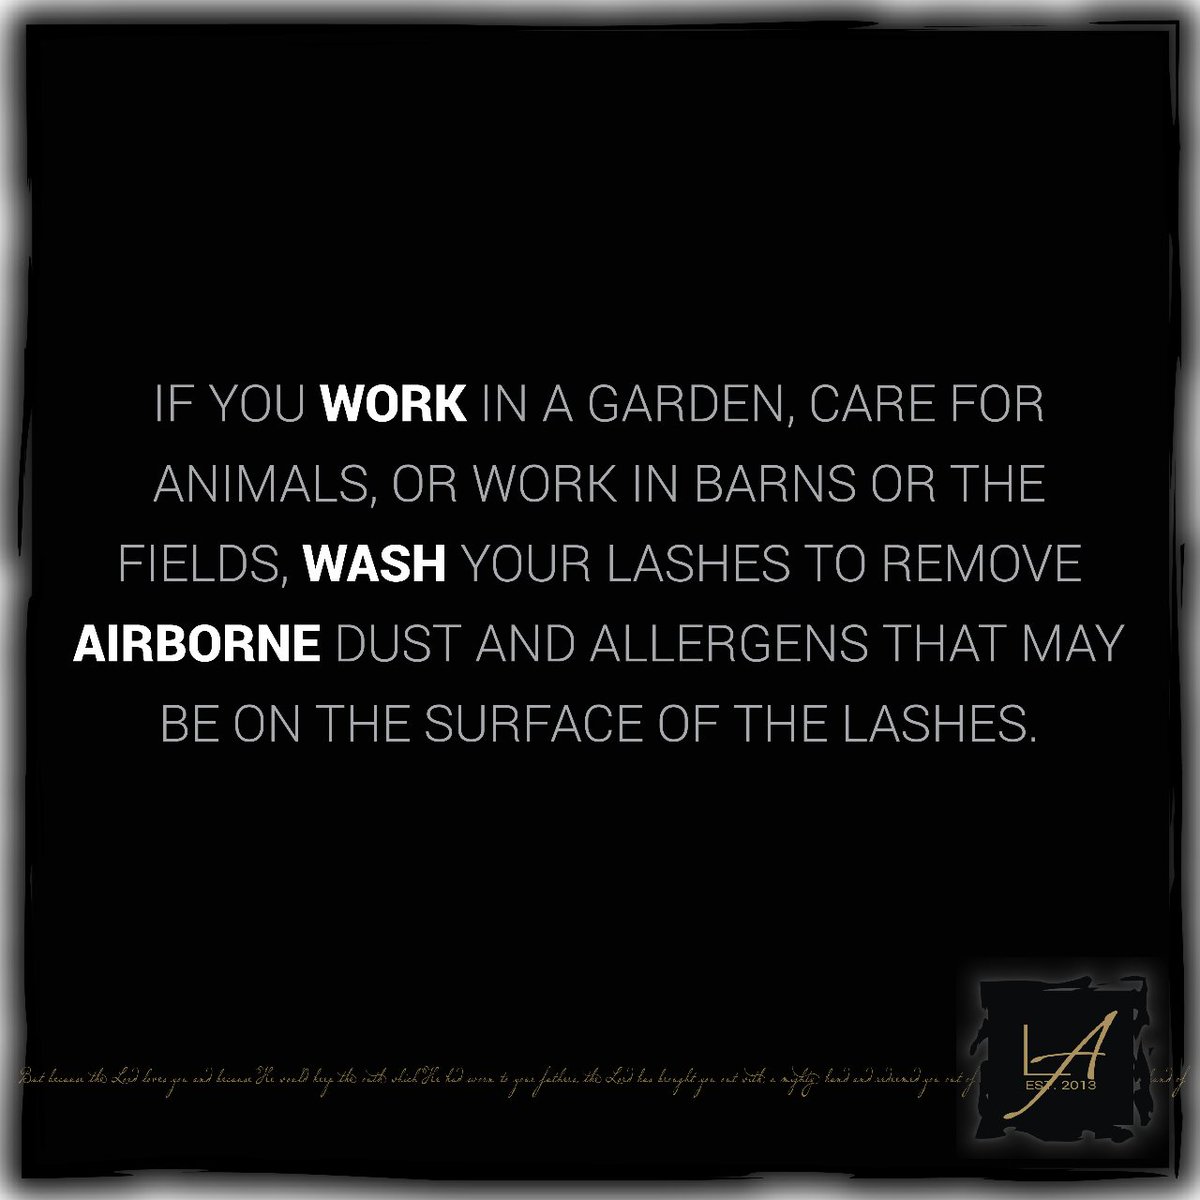 Wash your lashes after working around allergens #azlashtechniciancourse #azlashes #lashes #xtremelashesscottsdale #scottsdalelashes #lashtechnician #lashretentiontips